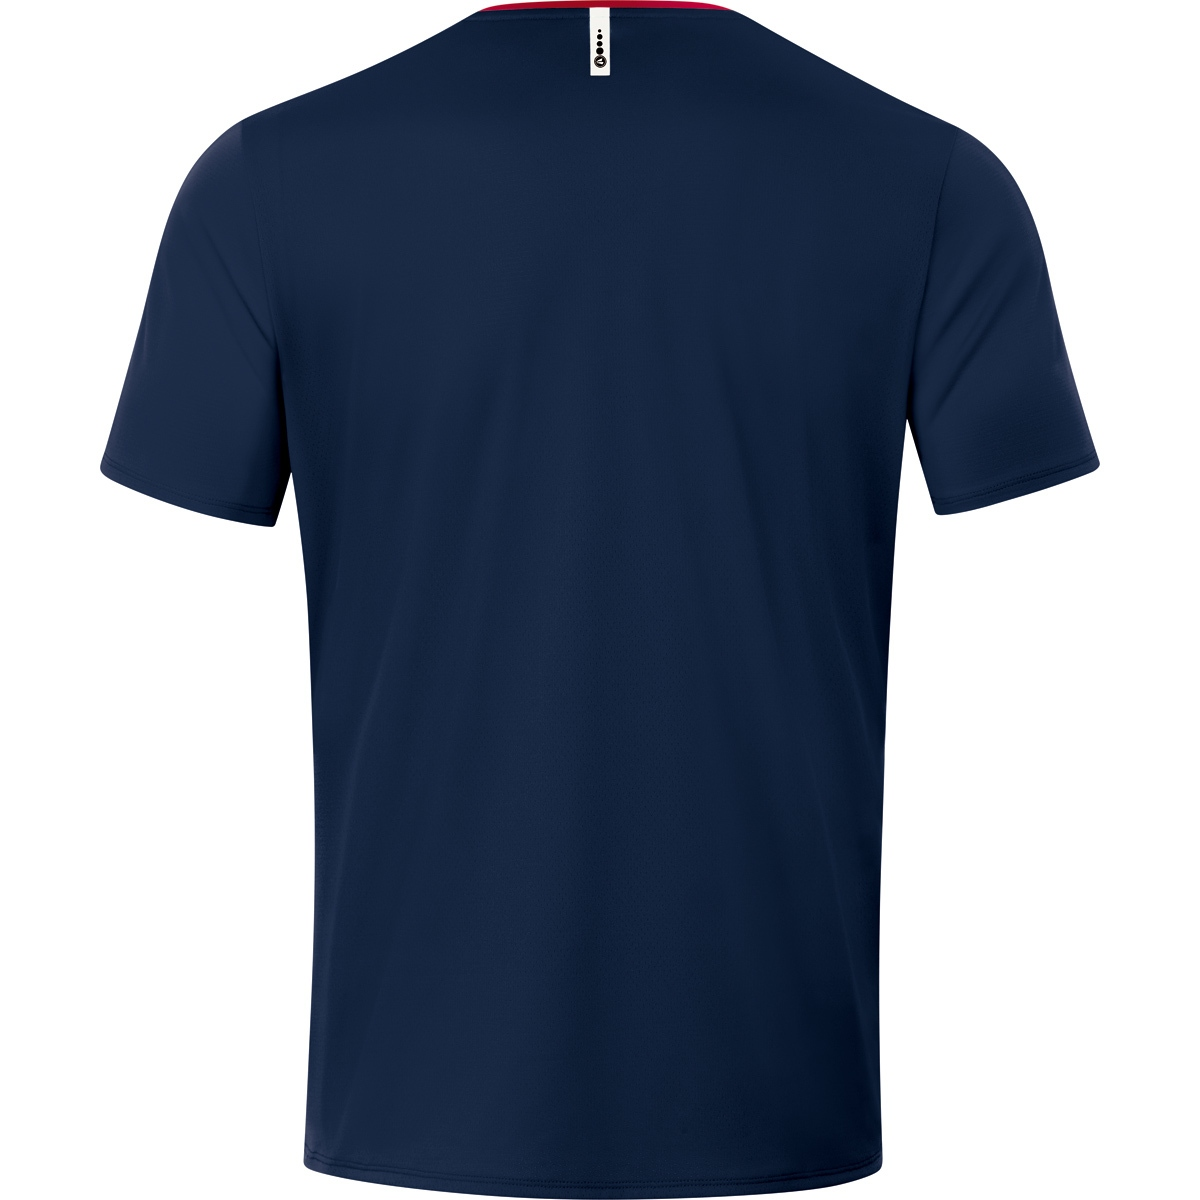 JAKO T-Shirt Champ 2.0 Gr. rot, marine/chili 6120 Kinder, 116